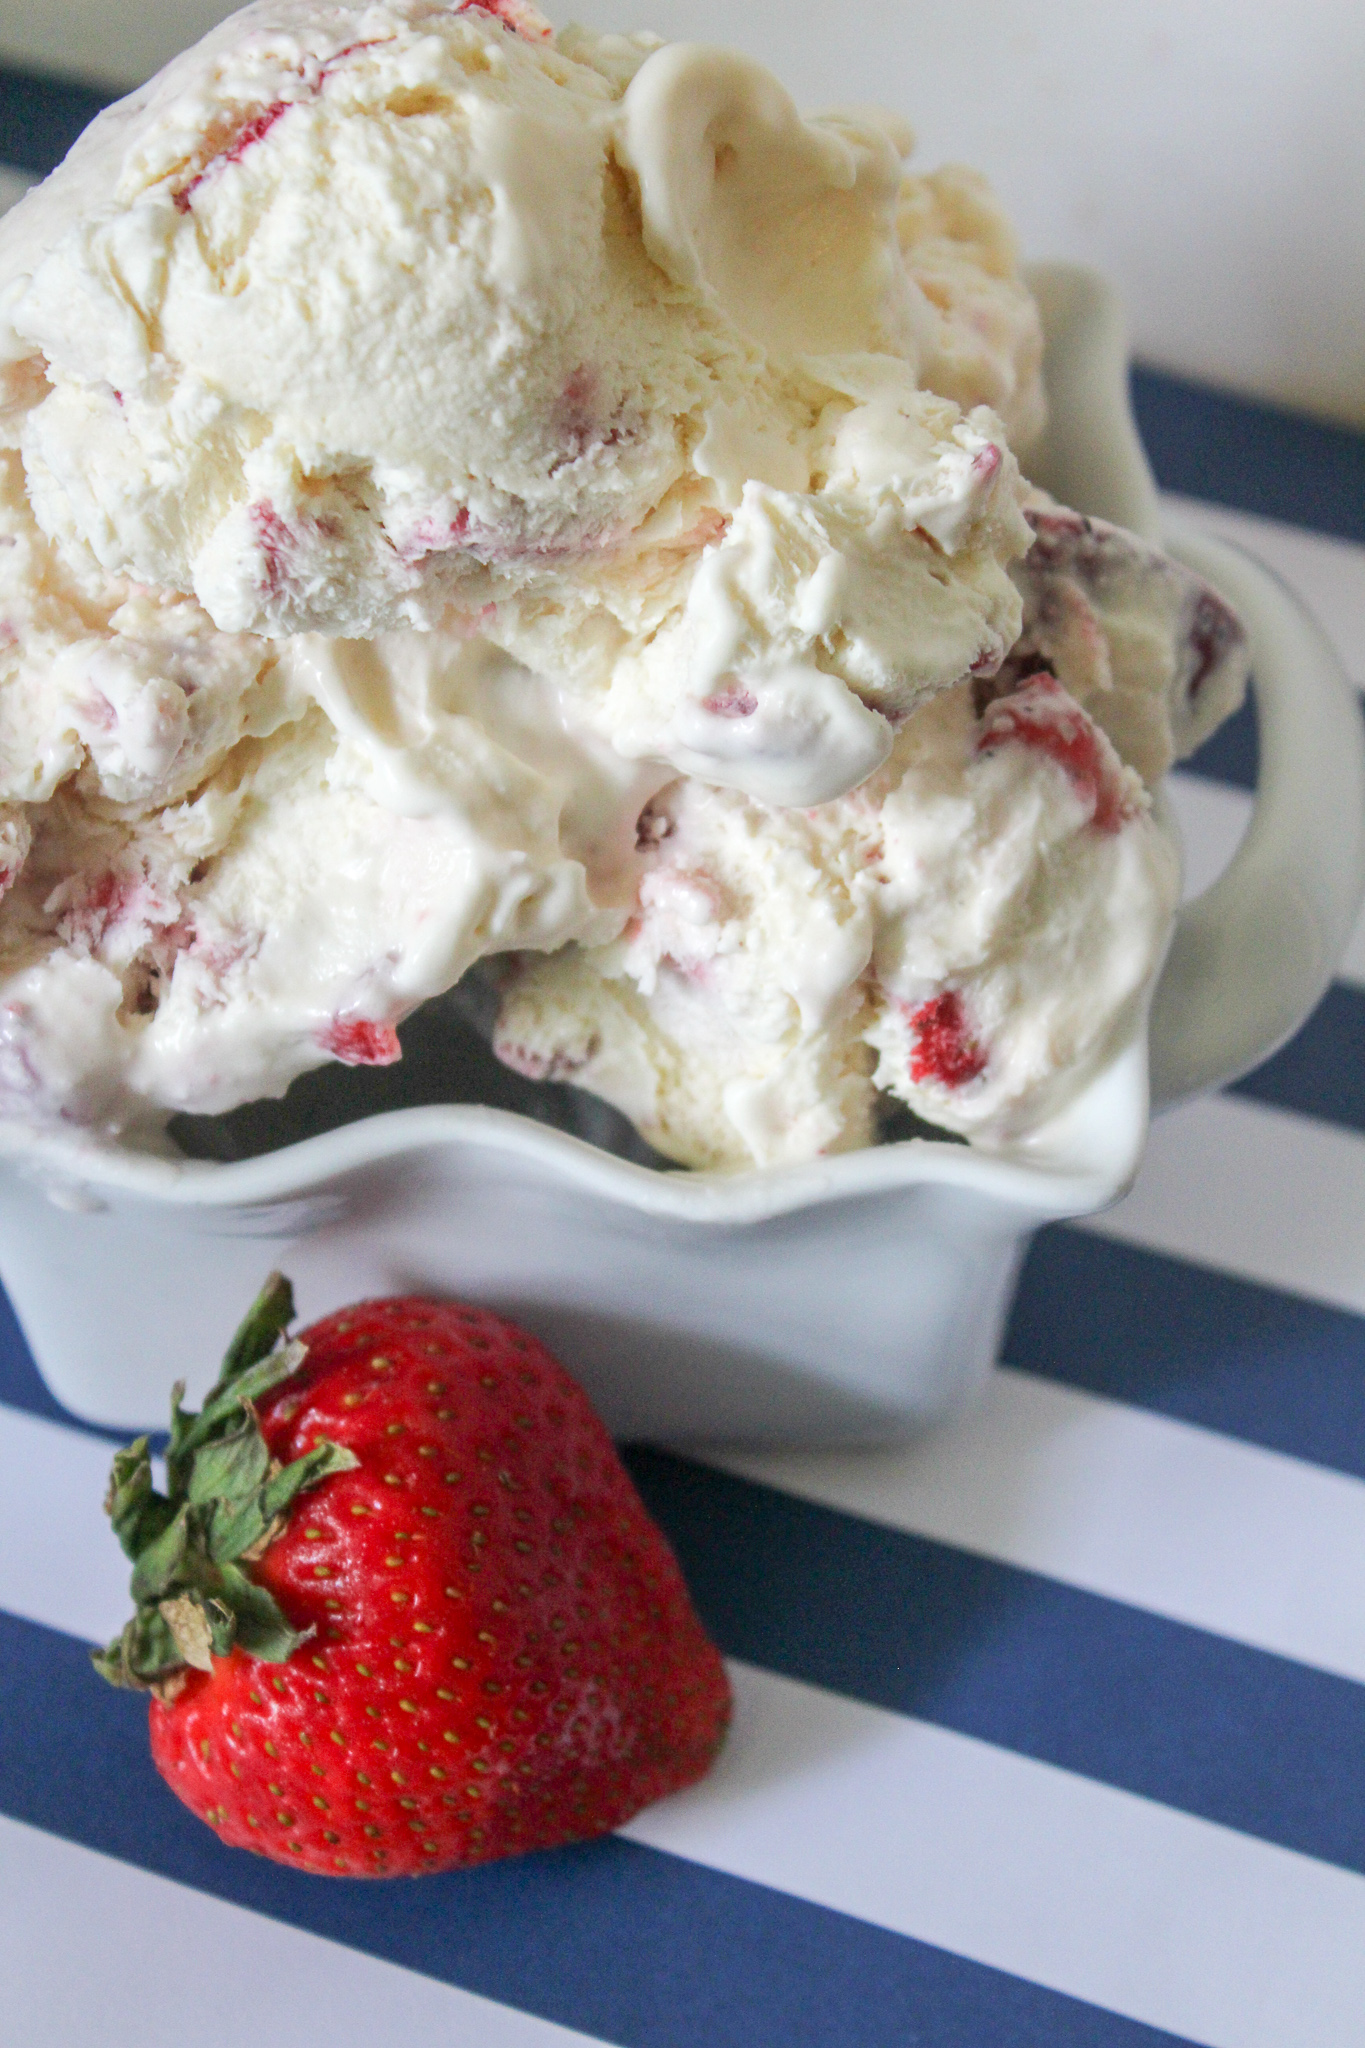 Strawberries and Cream Ice Cream